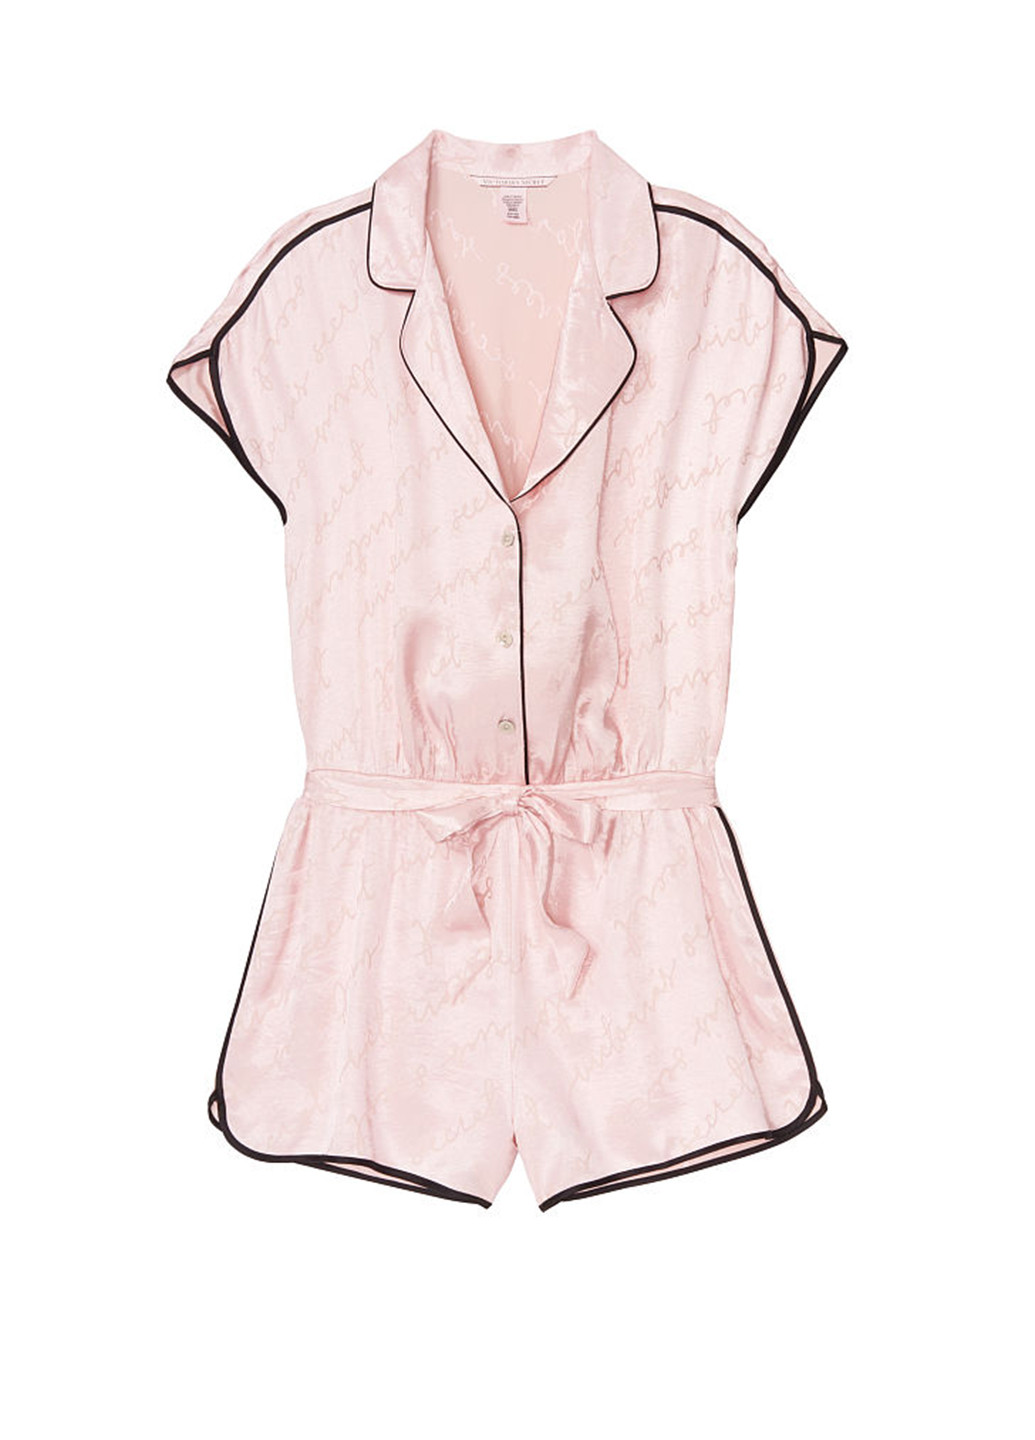 Комбинезон Victoria's Secret комбинезон-шорты светло-розовый домашний вискоза, сатин